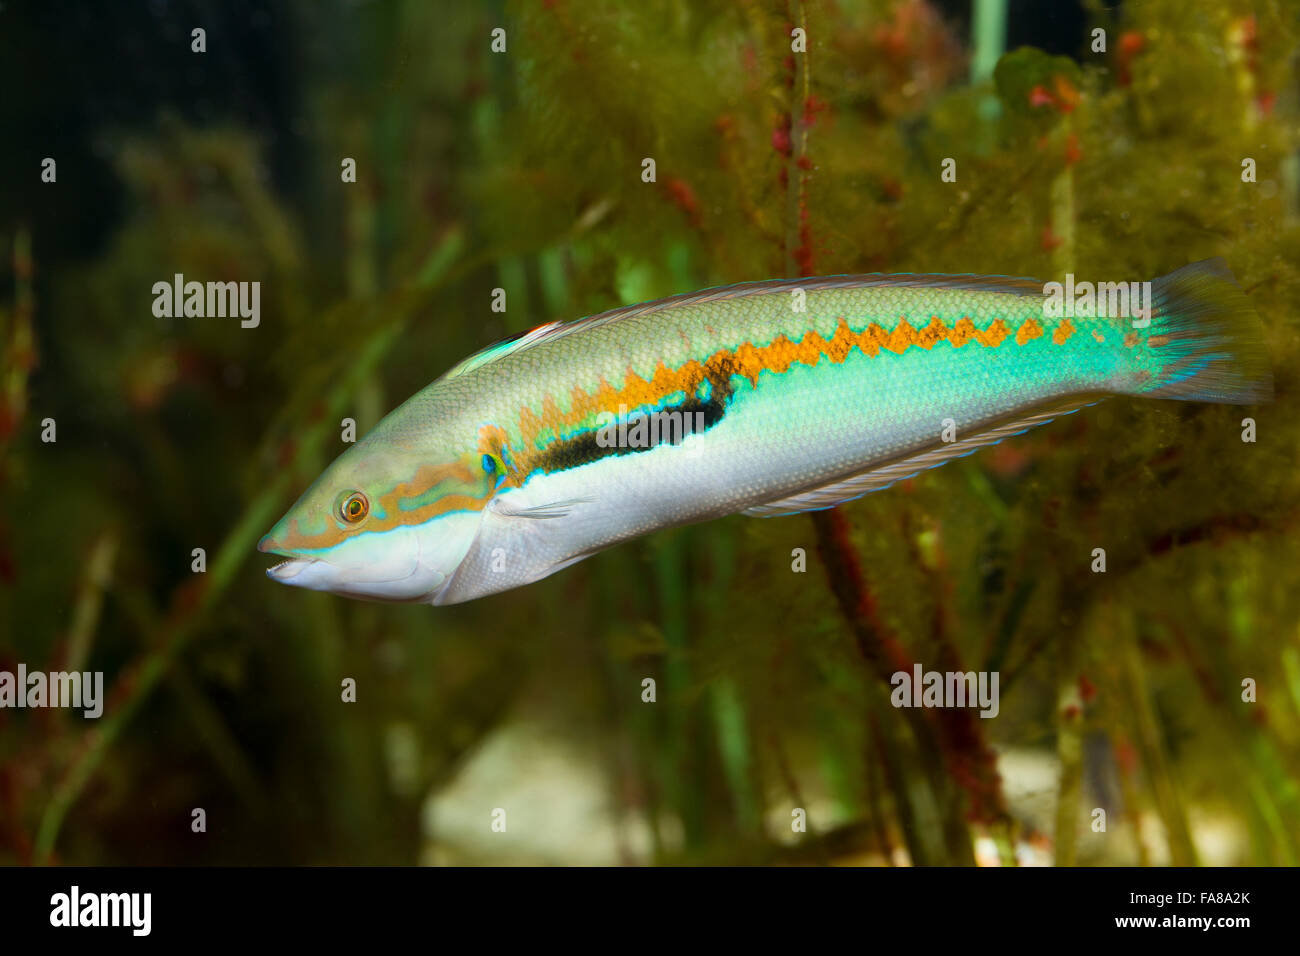 Mediterranean rainbow wrasse, rainbowfish, male, Meerjunker, Mittelmeer-Junker, Männchen, Coris julis, Labrus julis Stock Photo